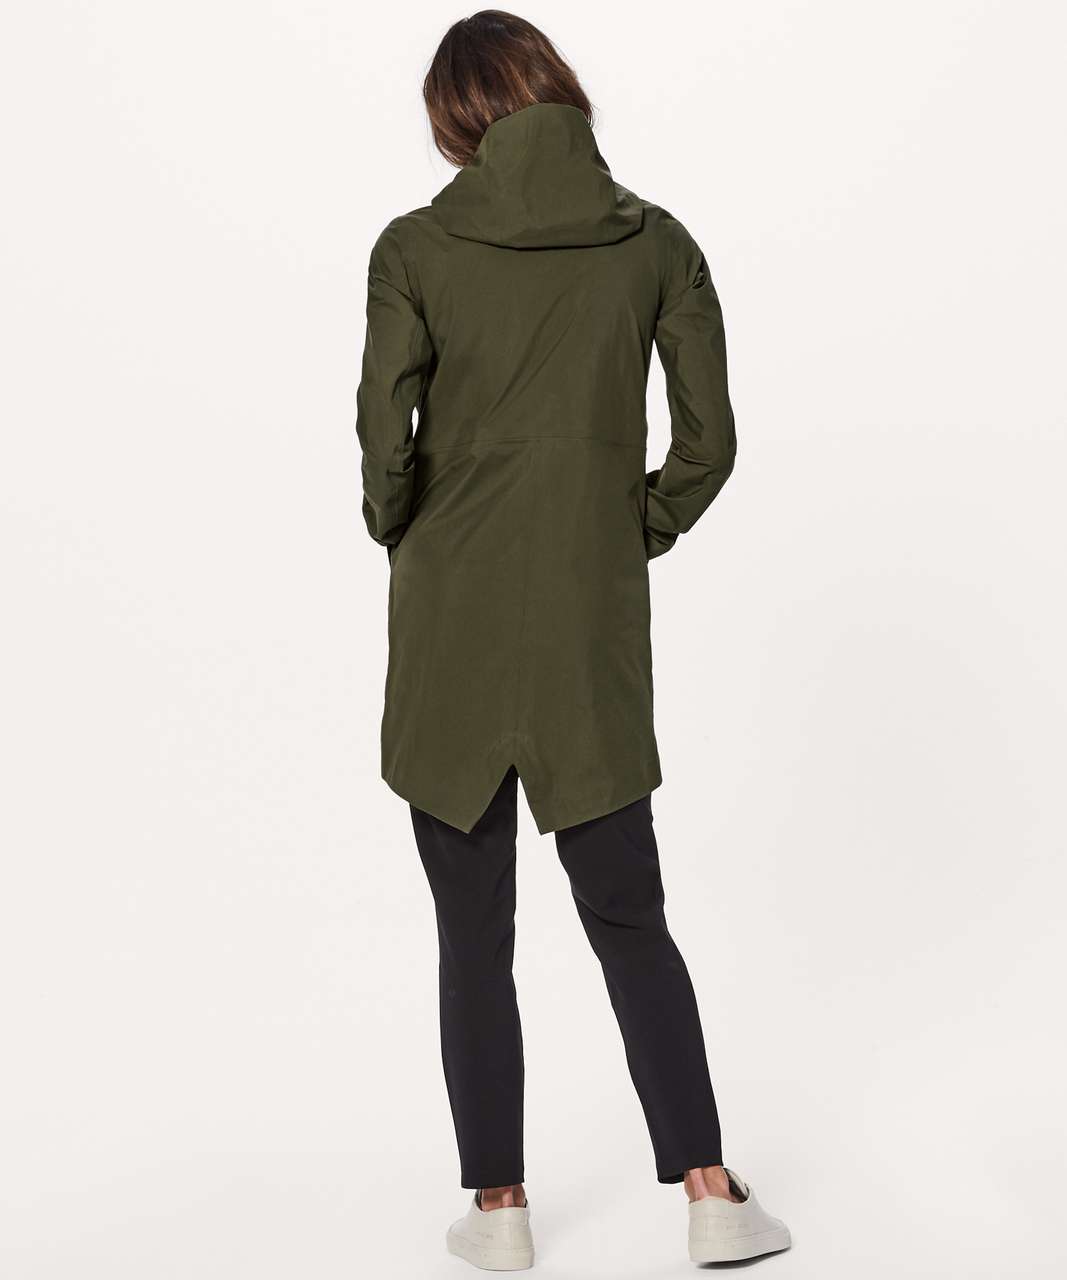 rain haven jacket insulated lululemon